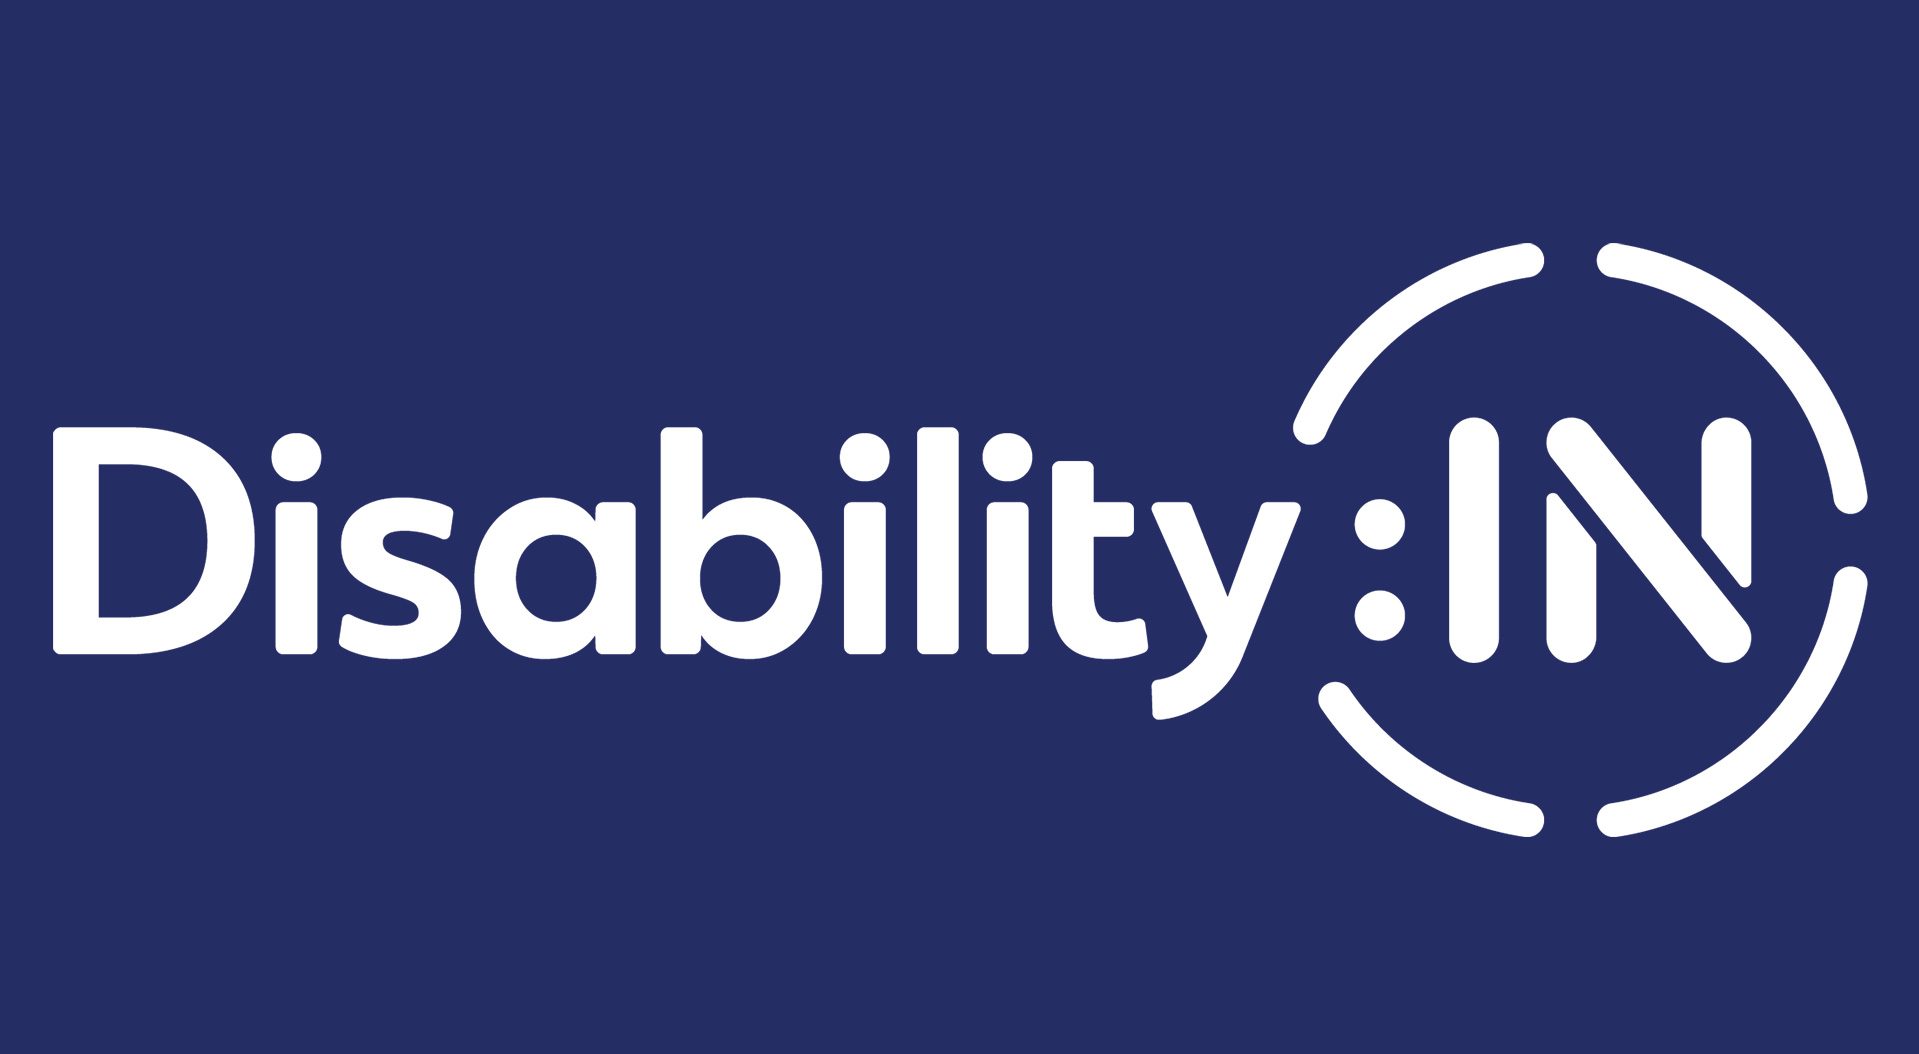 DisabilityIN logo on indigo